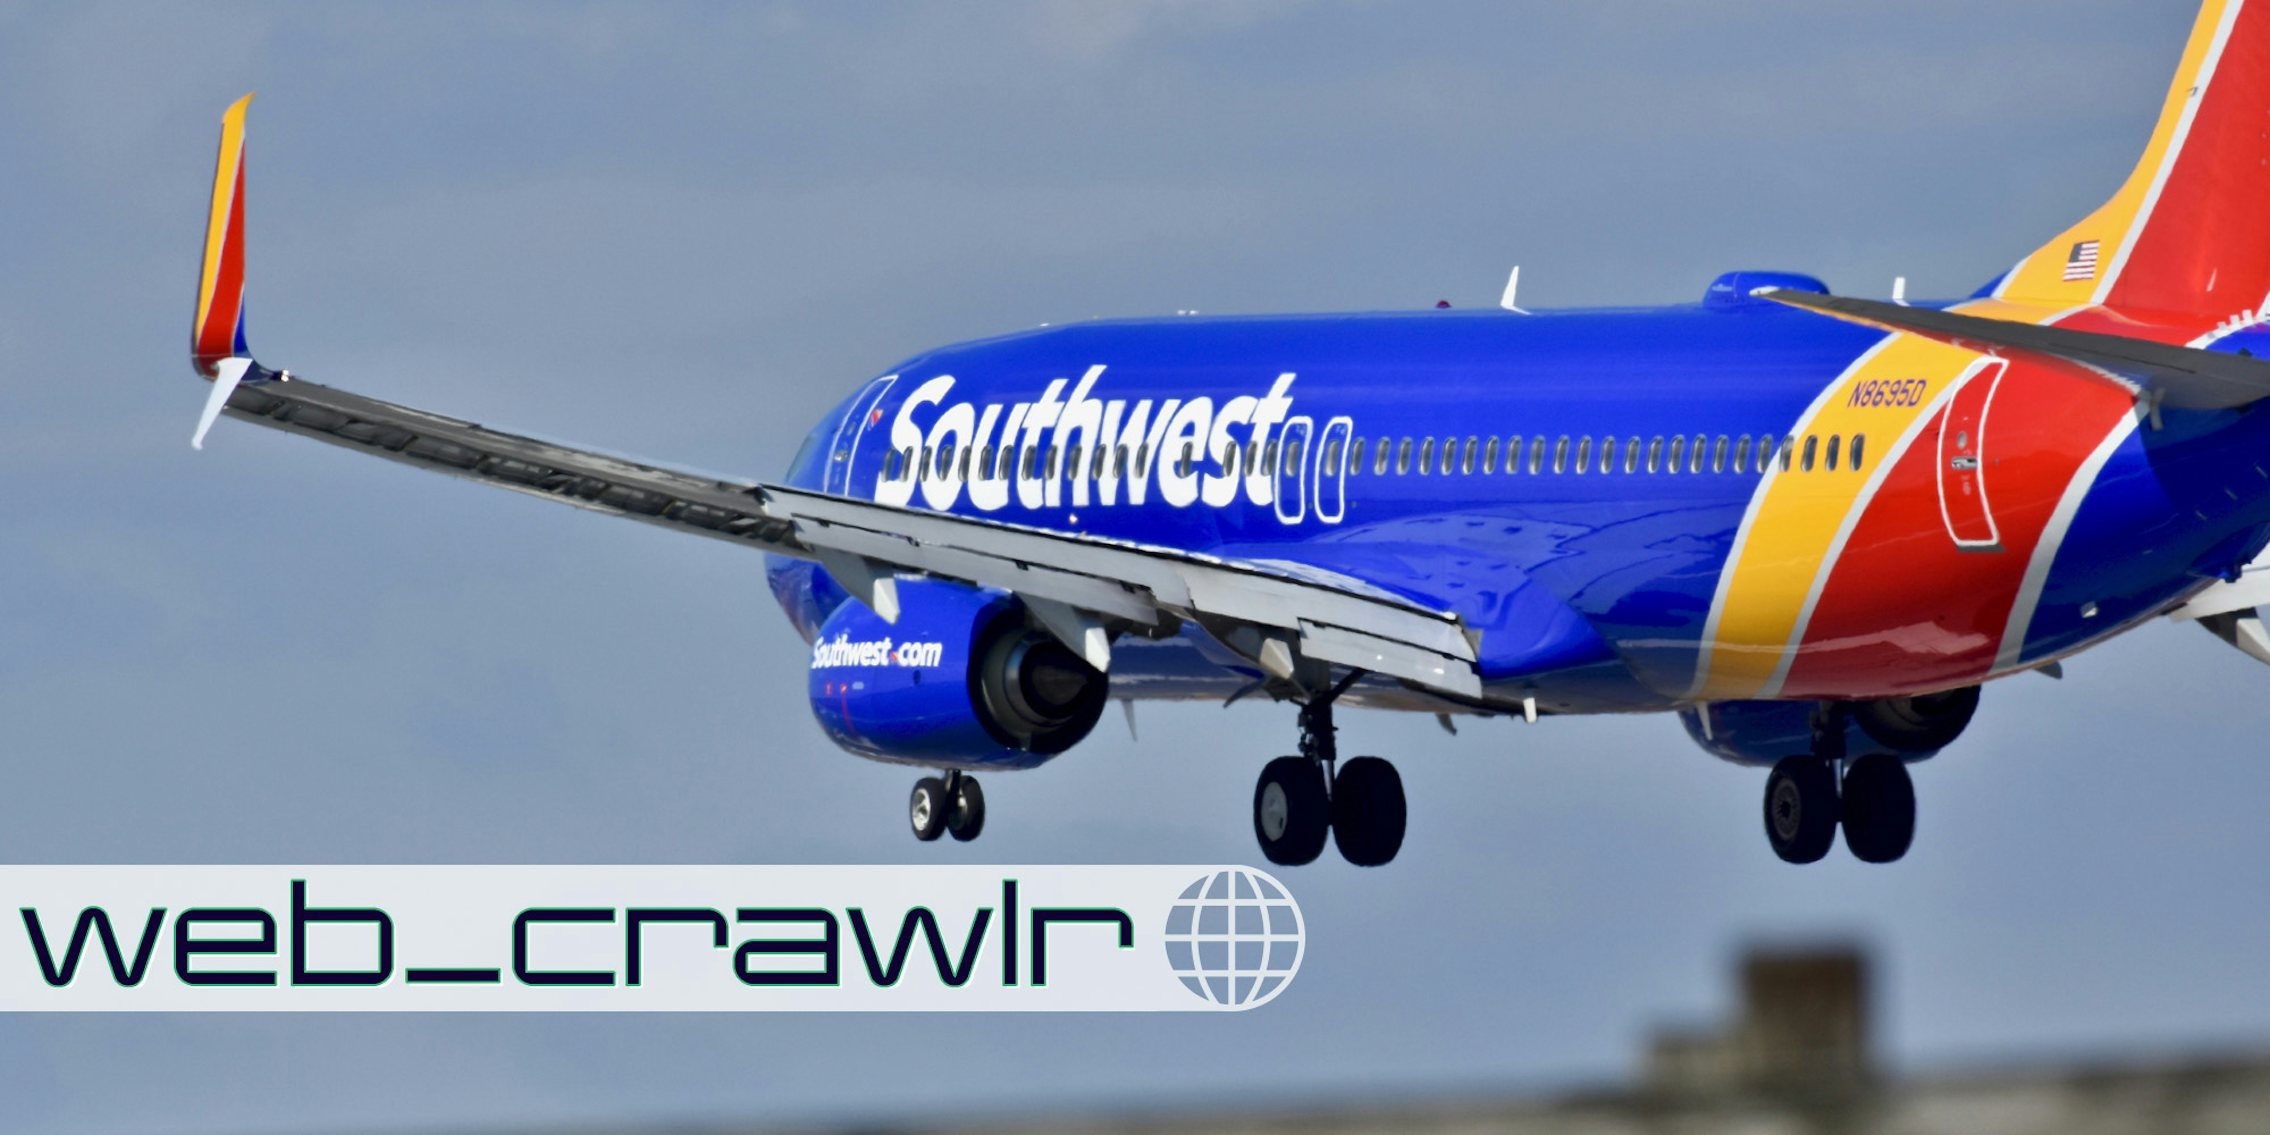 A Southwest Airlines flight landing. The Daily Dot newsletter web_crawlr logo is in the bottom left corner.